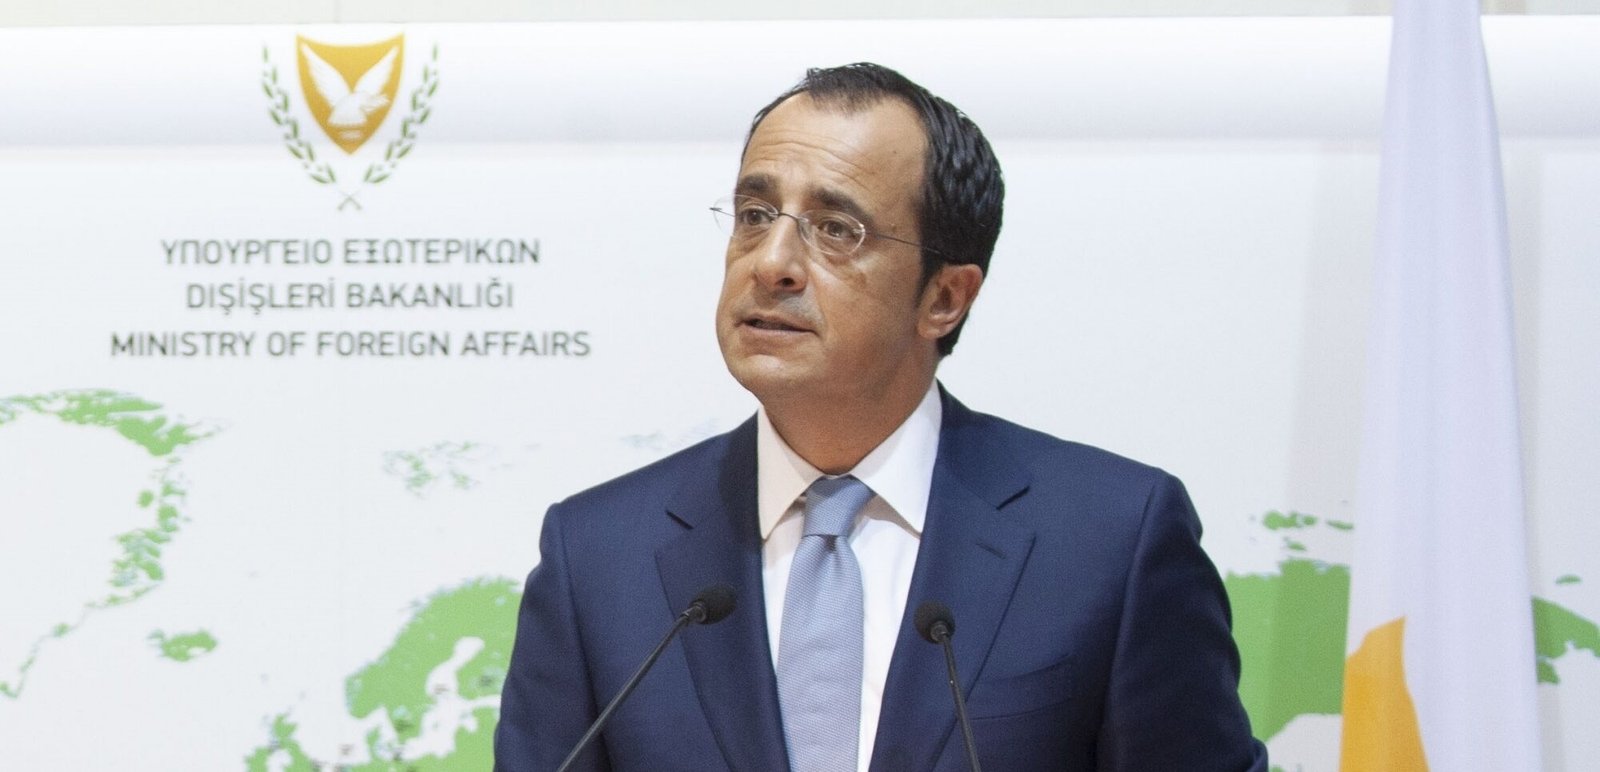 Cypriot Foreign Minister Nikos Christodoulides